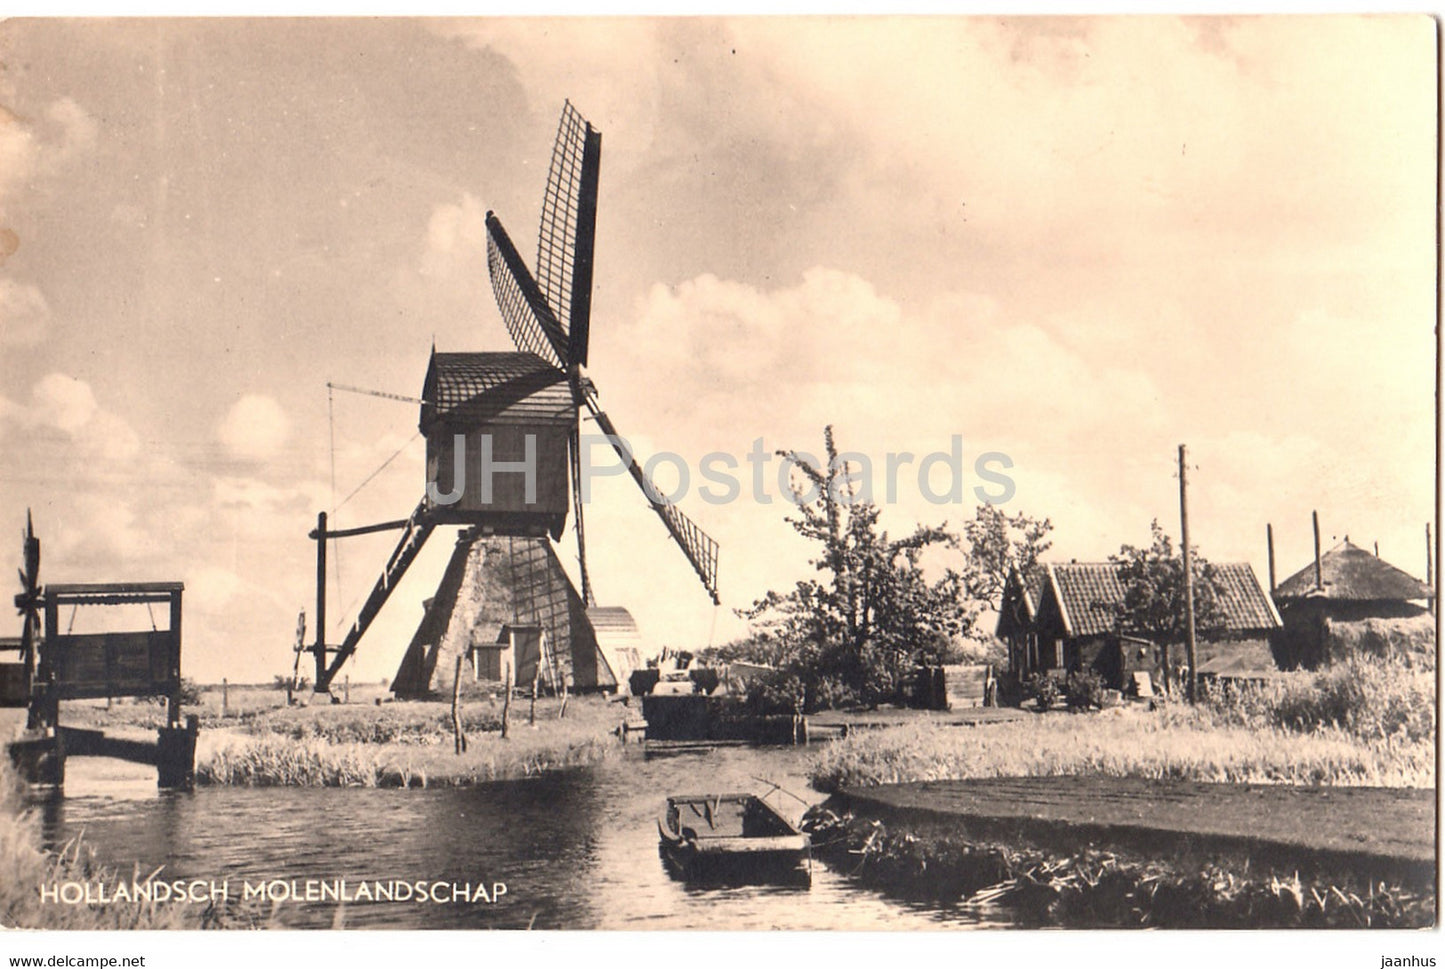 Hollandsch Molenlandschap - windmill - old postcard - Netherlands - used - JH Postcards